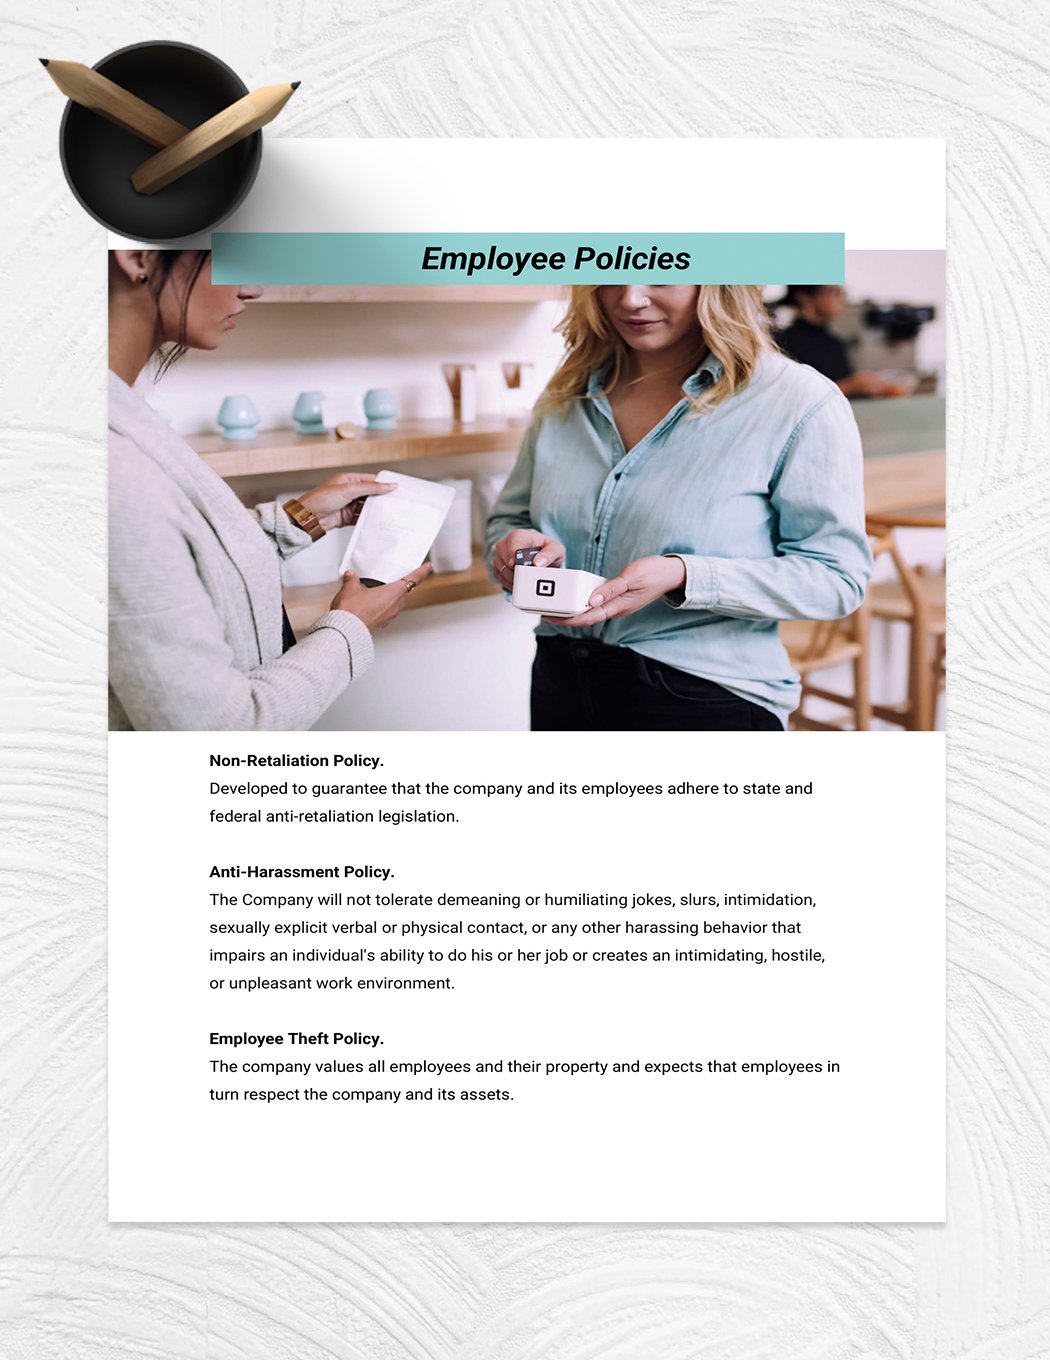 Pharmacy Employee Handbook Template